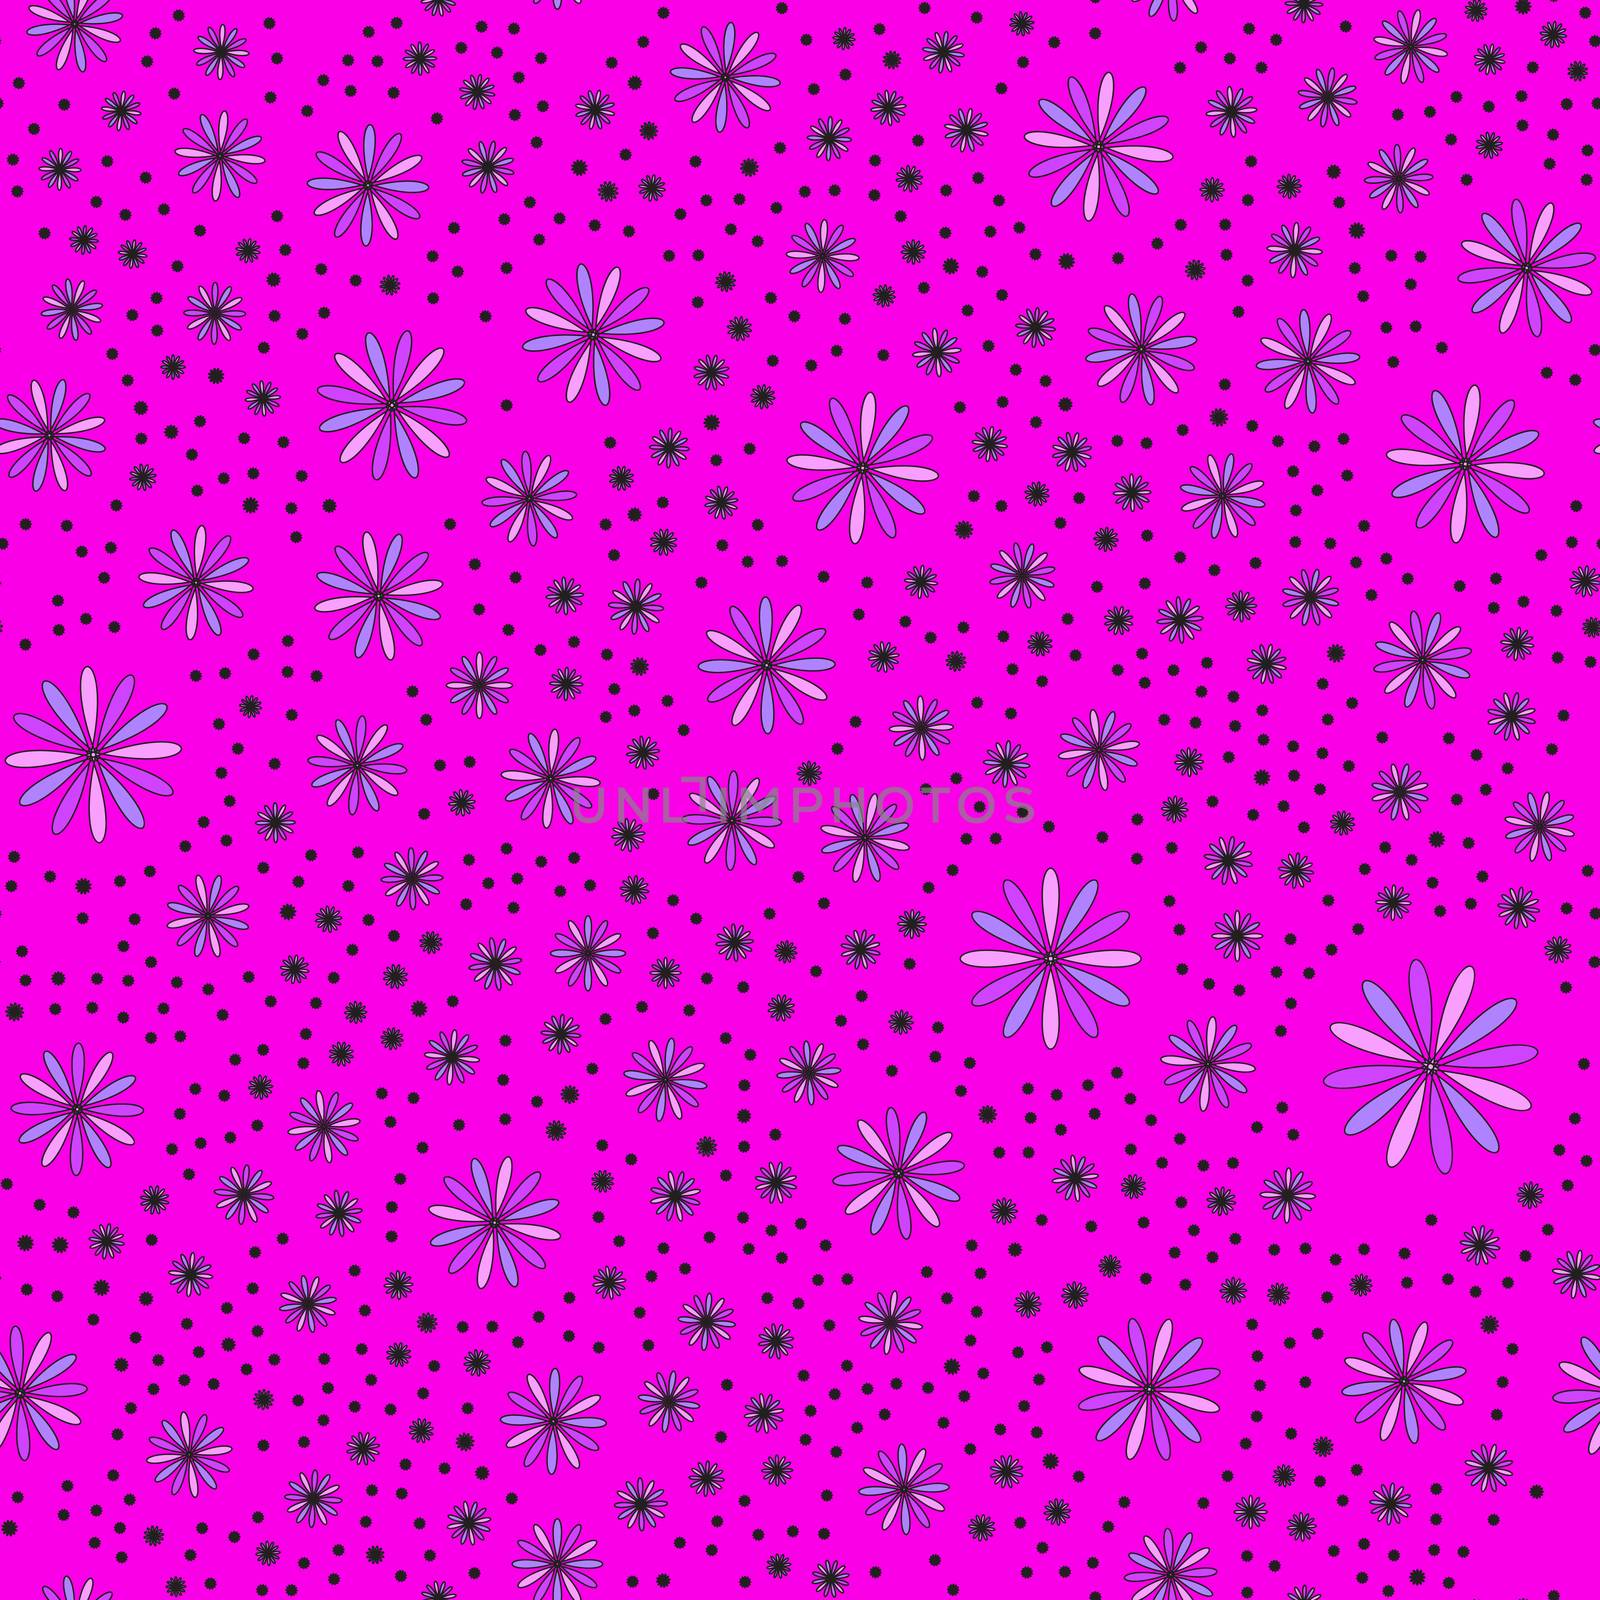 Floral vector pattern by helga_preiman